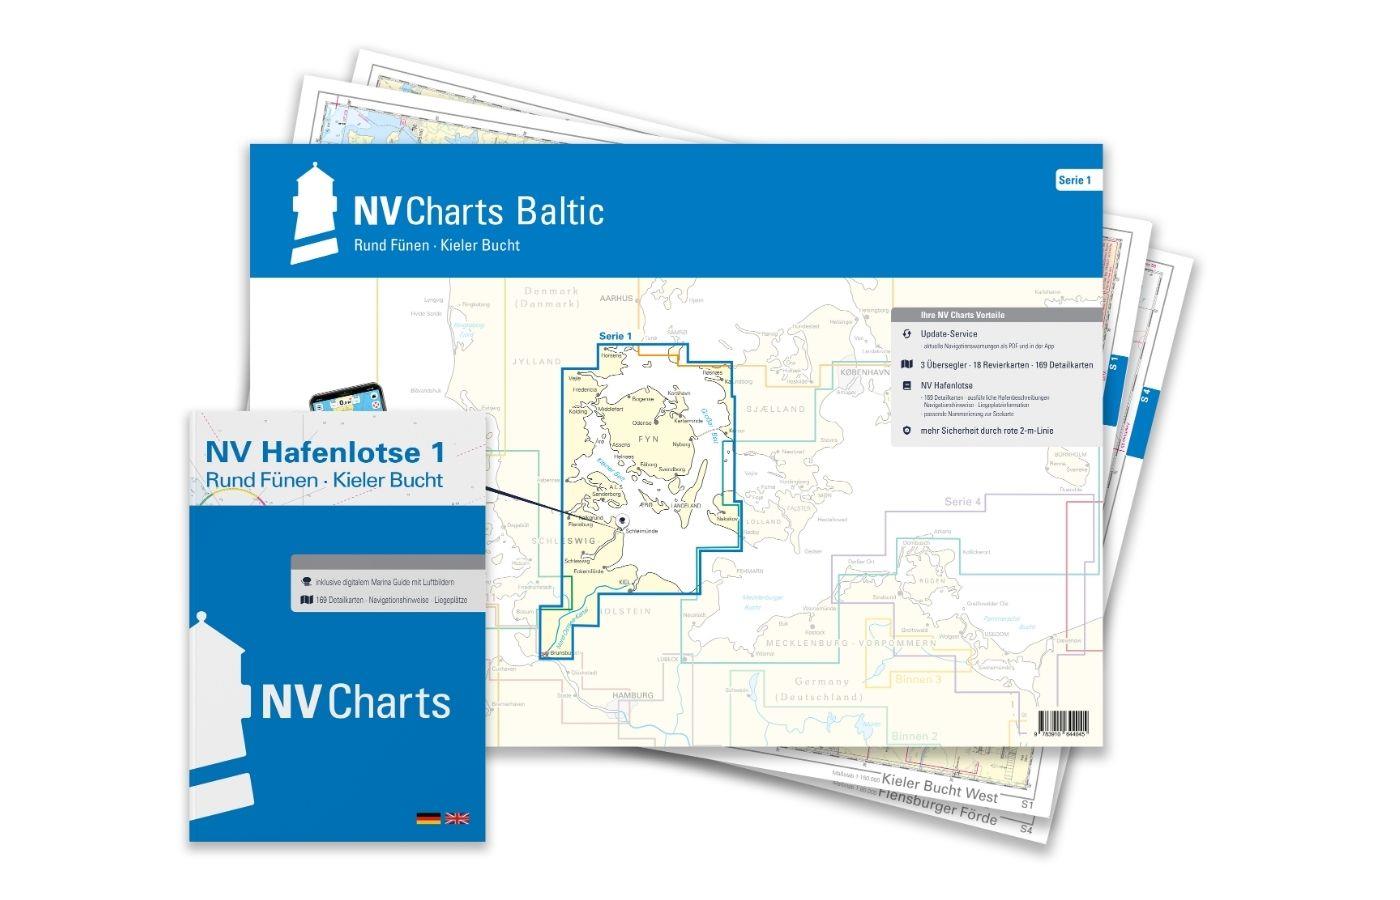 NV Charts Baltic Plano Serie 1, Rund Fünen-Kieler Bucht